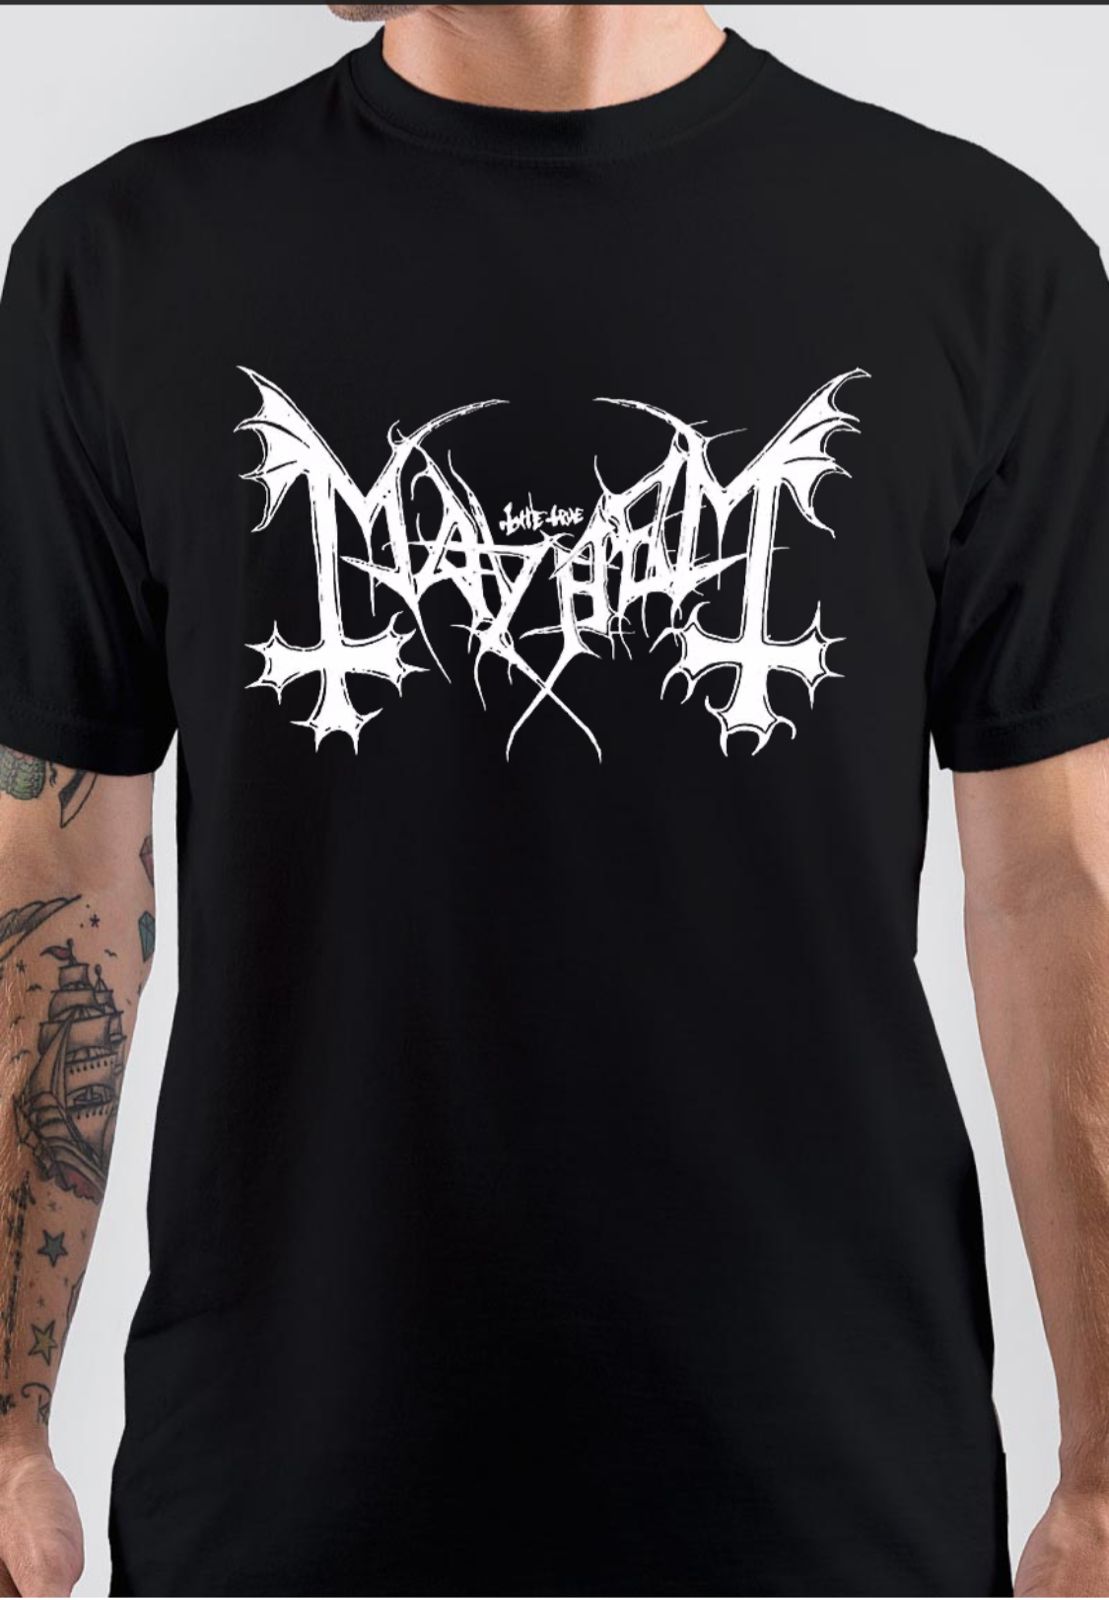 https://www.swagshirts99.com/wp-content/uploads/2021/09/Mayhem-T-Shirt.jpeg